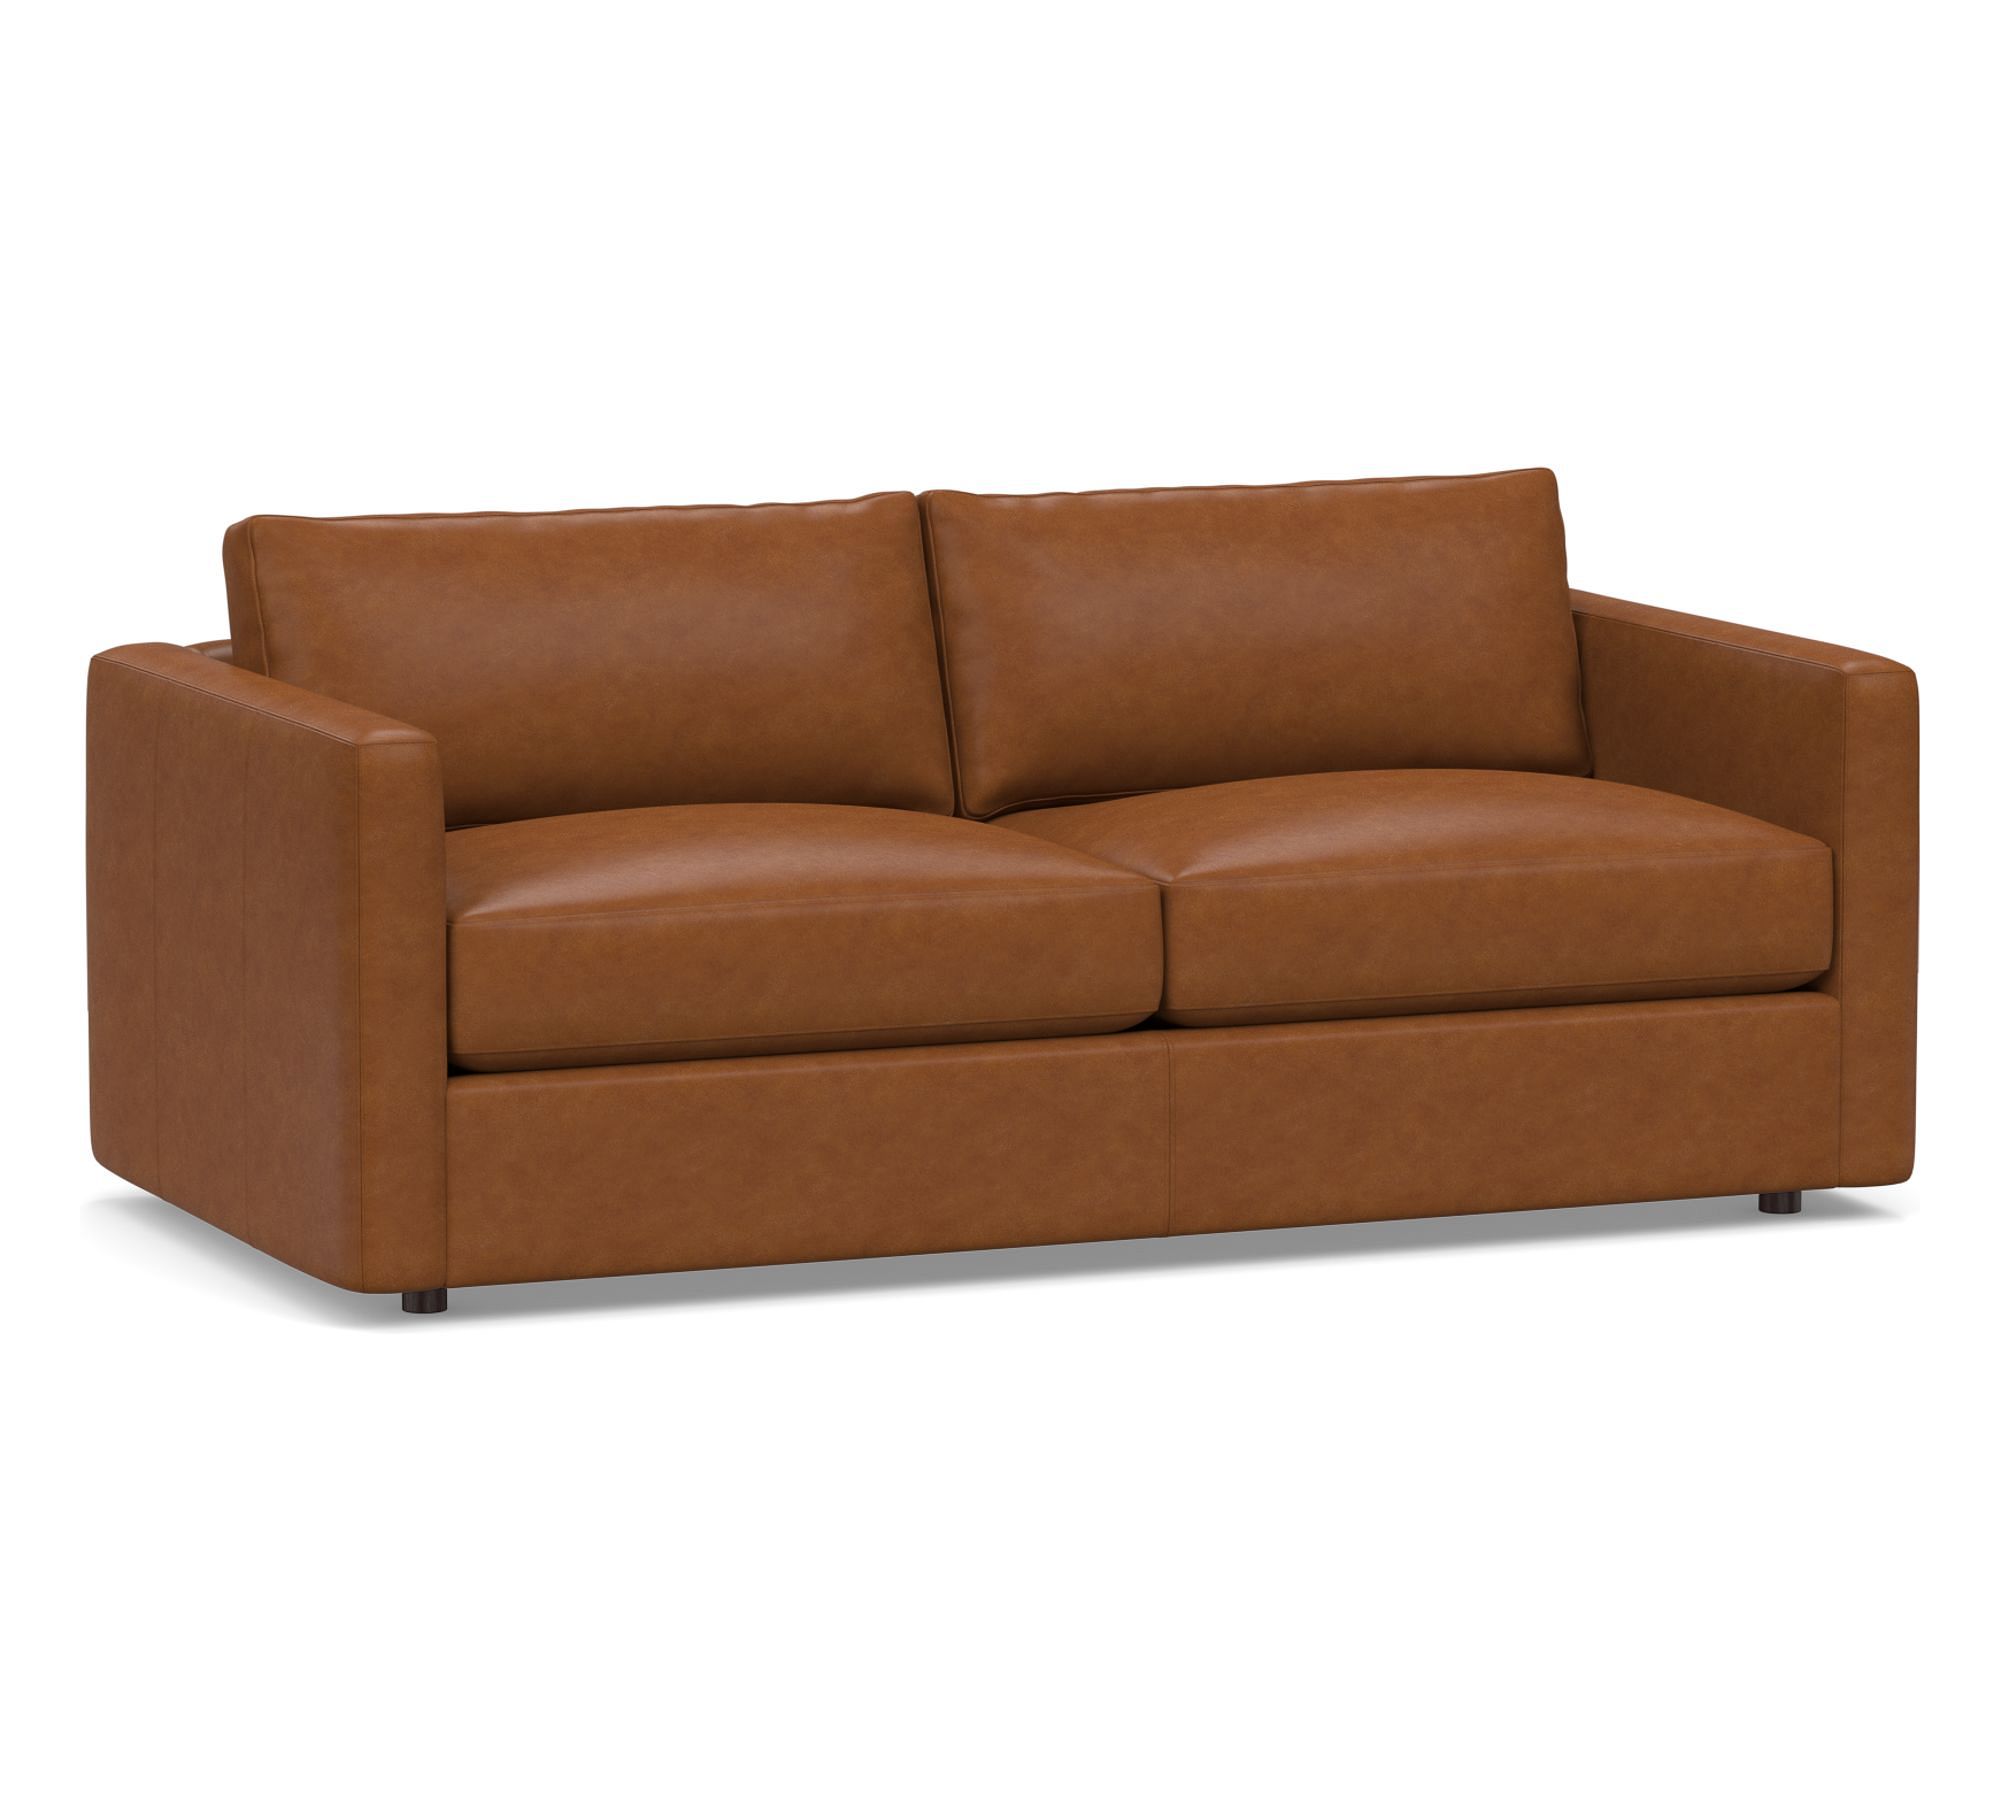 Carmel Slim Arm Leather Sleeper Sofa (80")